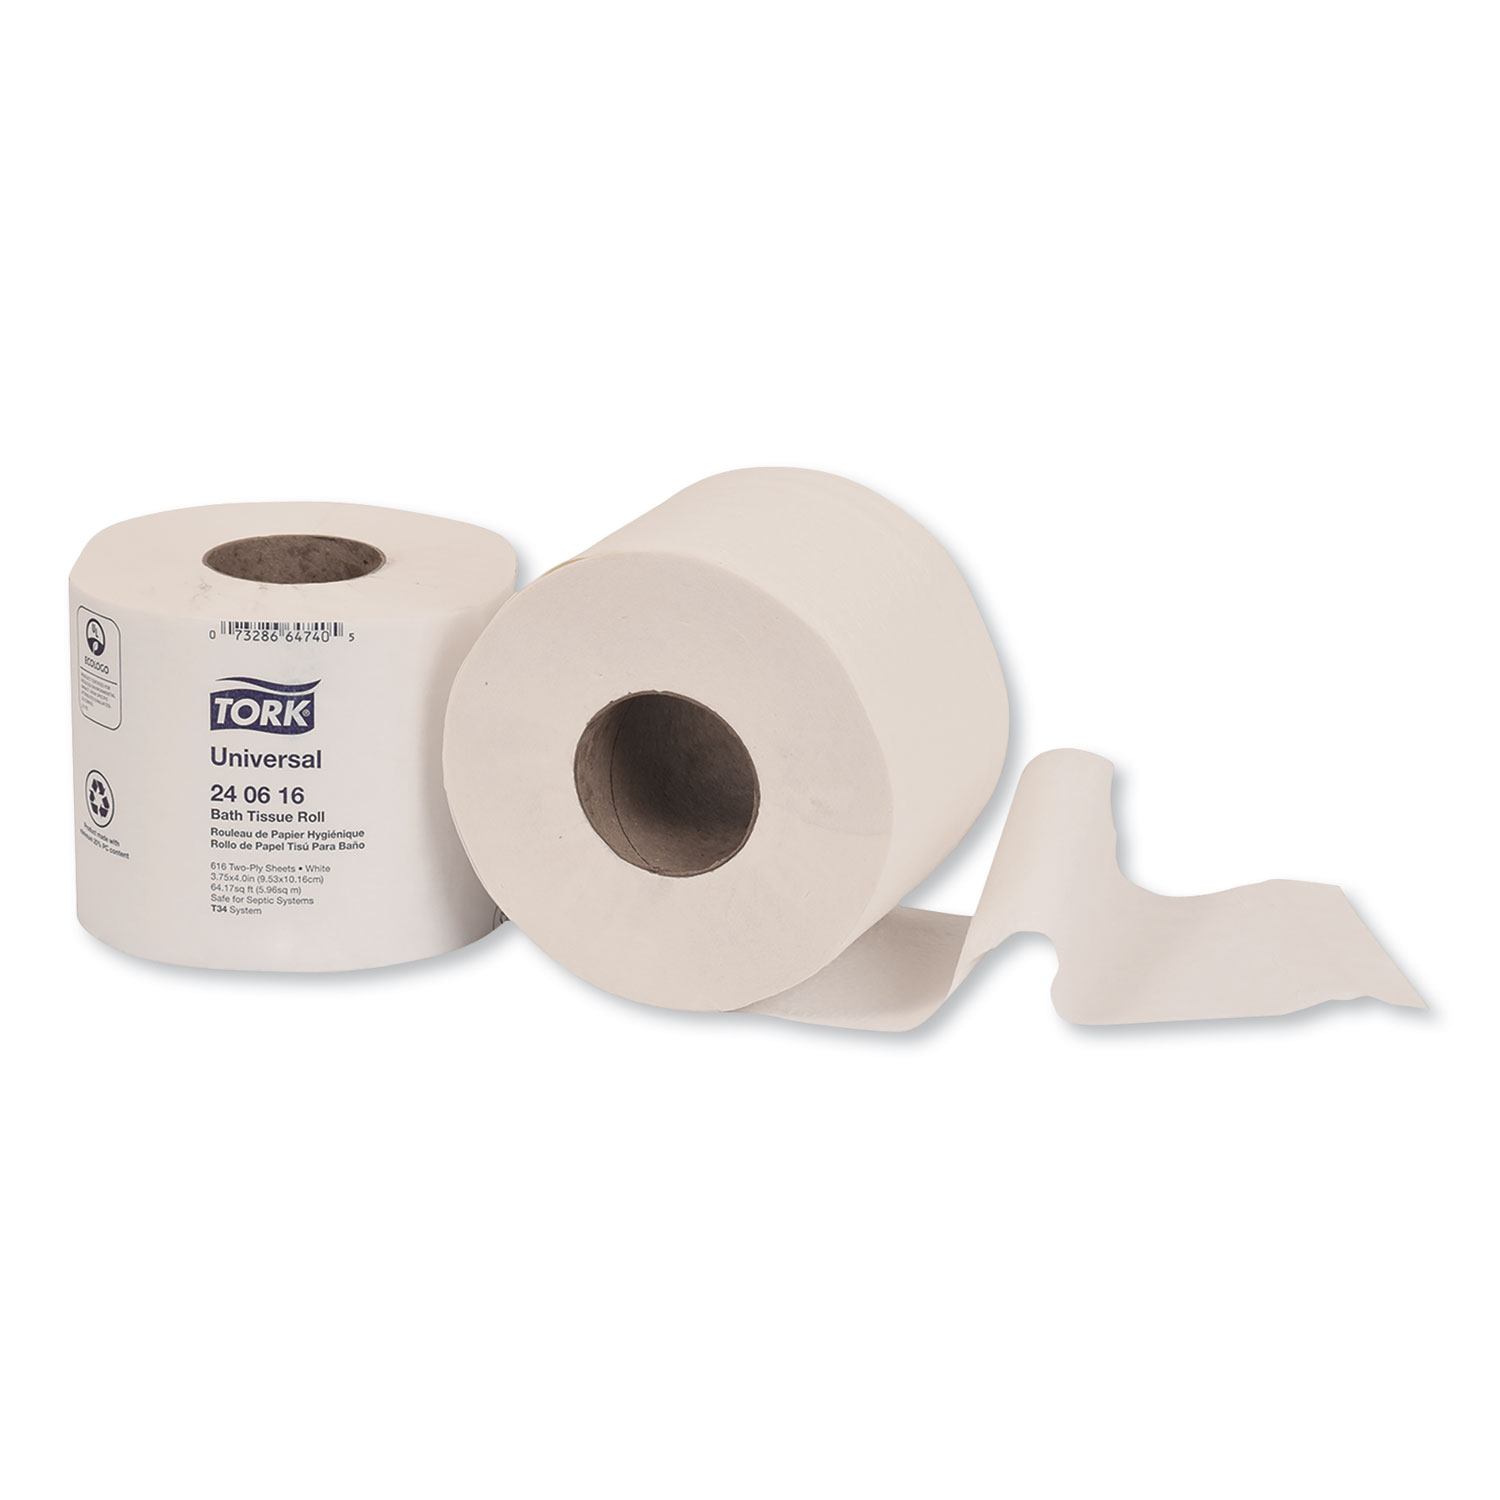  Tork 240616 Universal Bath Tissue, Septic Safe, 2-Ply, White, 616 Sheets/Roll, 48 Rolls/Carton (TRK240616) 